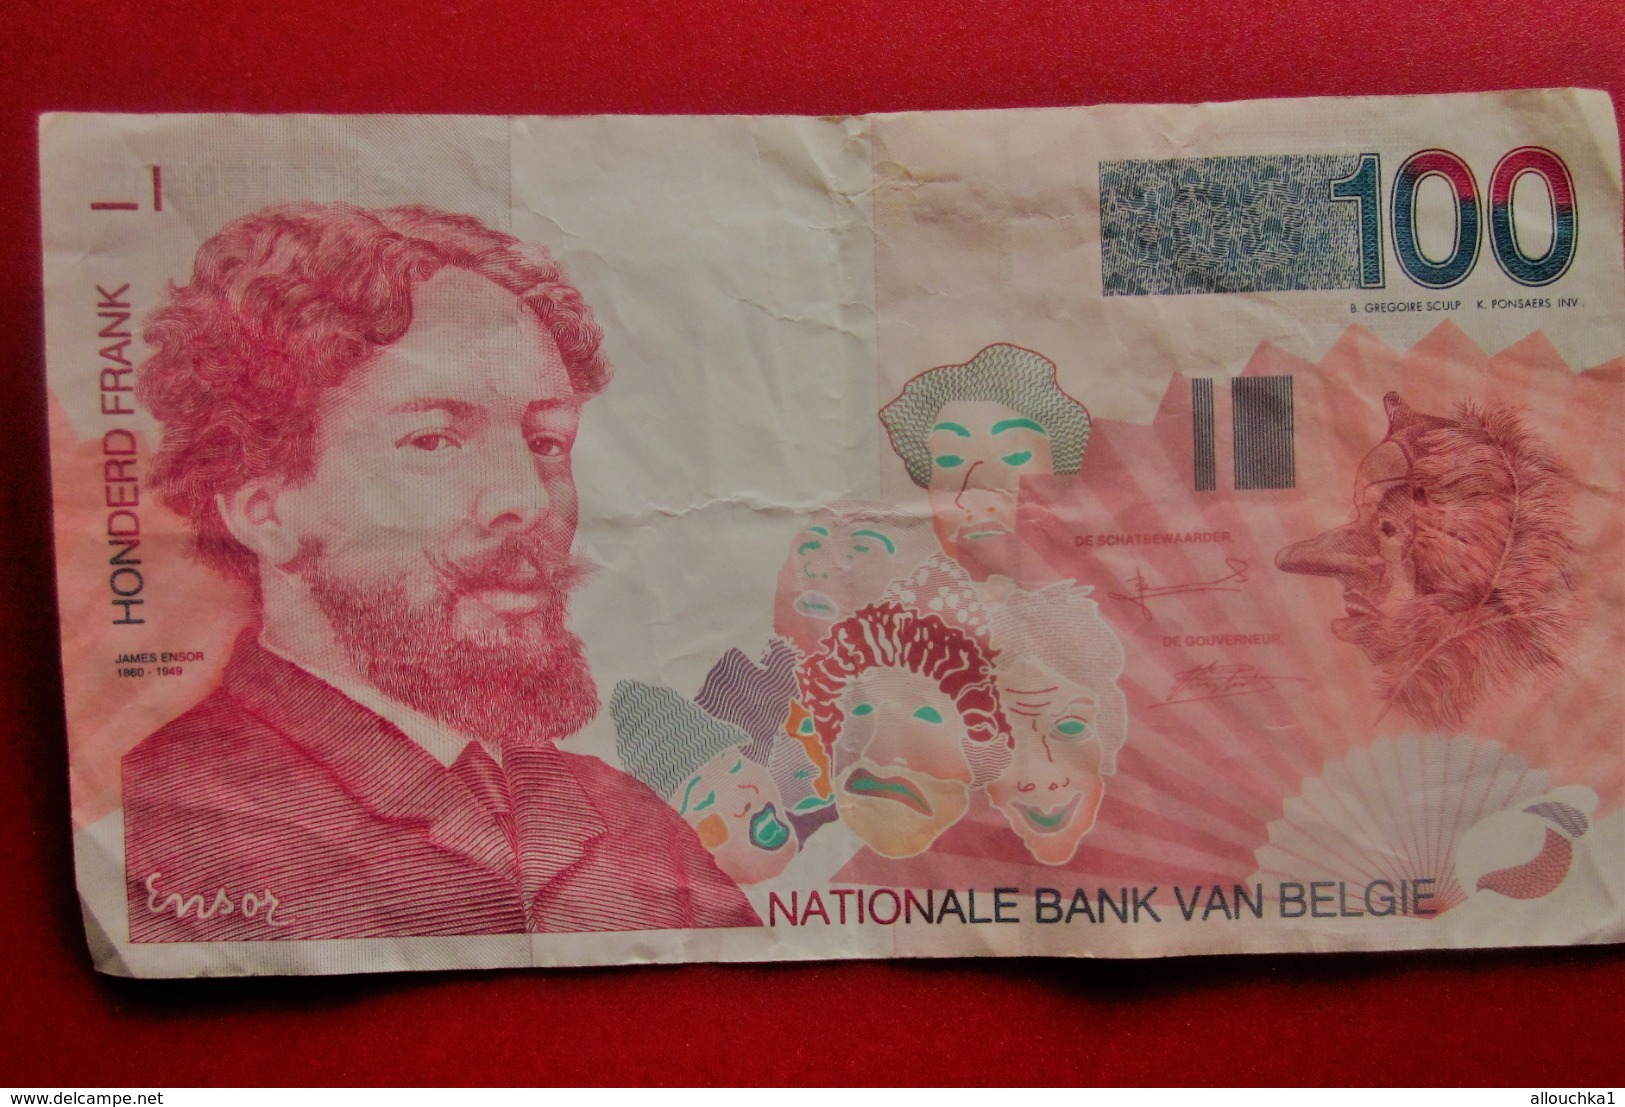 BANQUE NATIONALE BANK VAN BELGIE 100 FRANCS HONDERD FRANK Monnaies Billets Billet DEL AÑO (( Non-Daté-1995 )) (BANKNOTE) - 100 Franchi